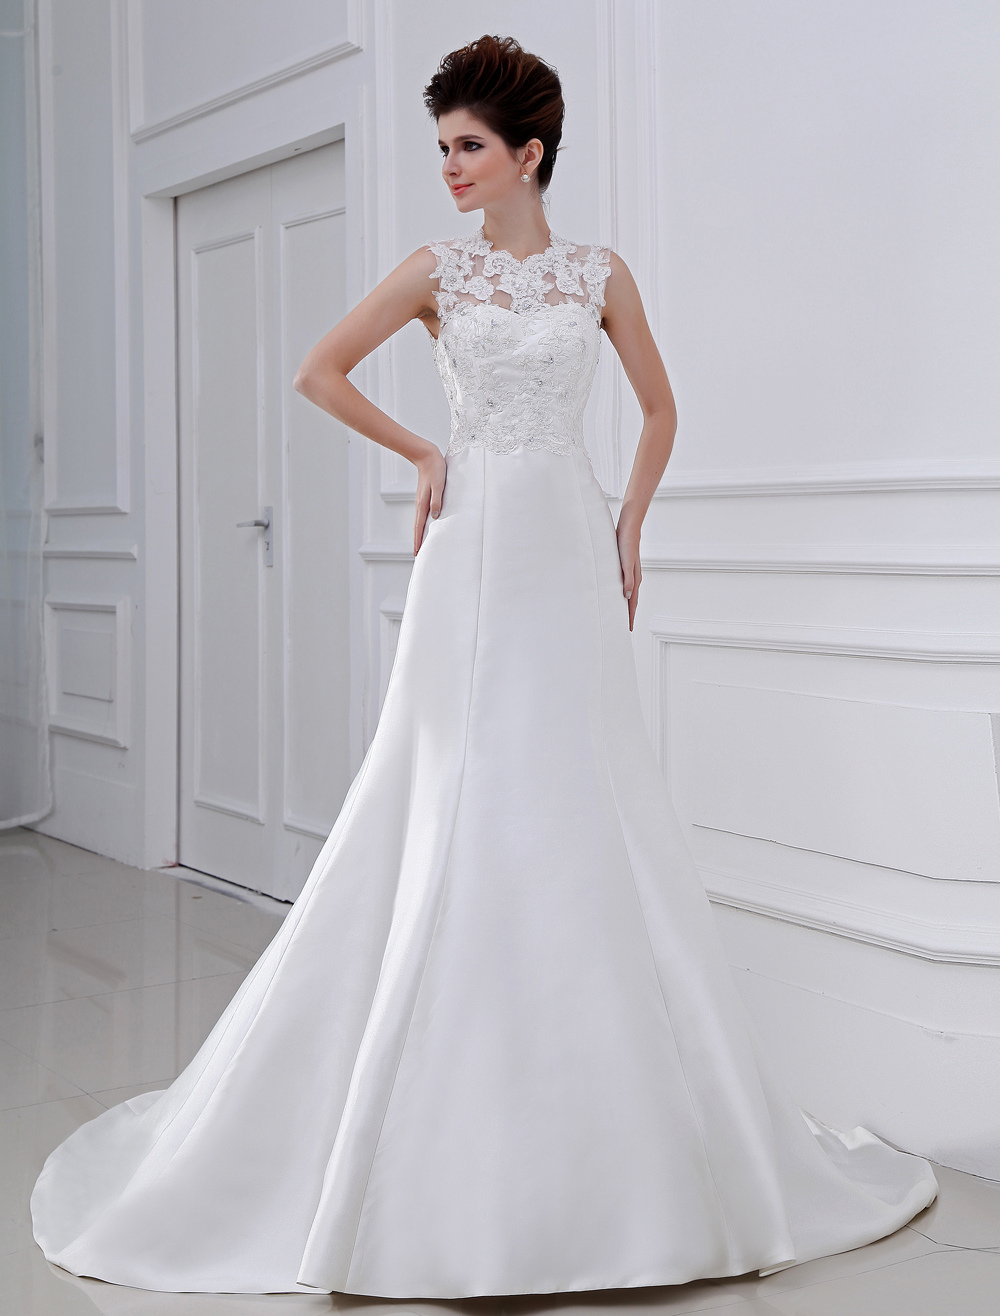 Glamorous Mermaid Sequin Taffeta White Bridal Wedding Gown - Milanoo.com